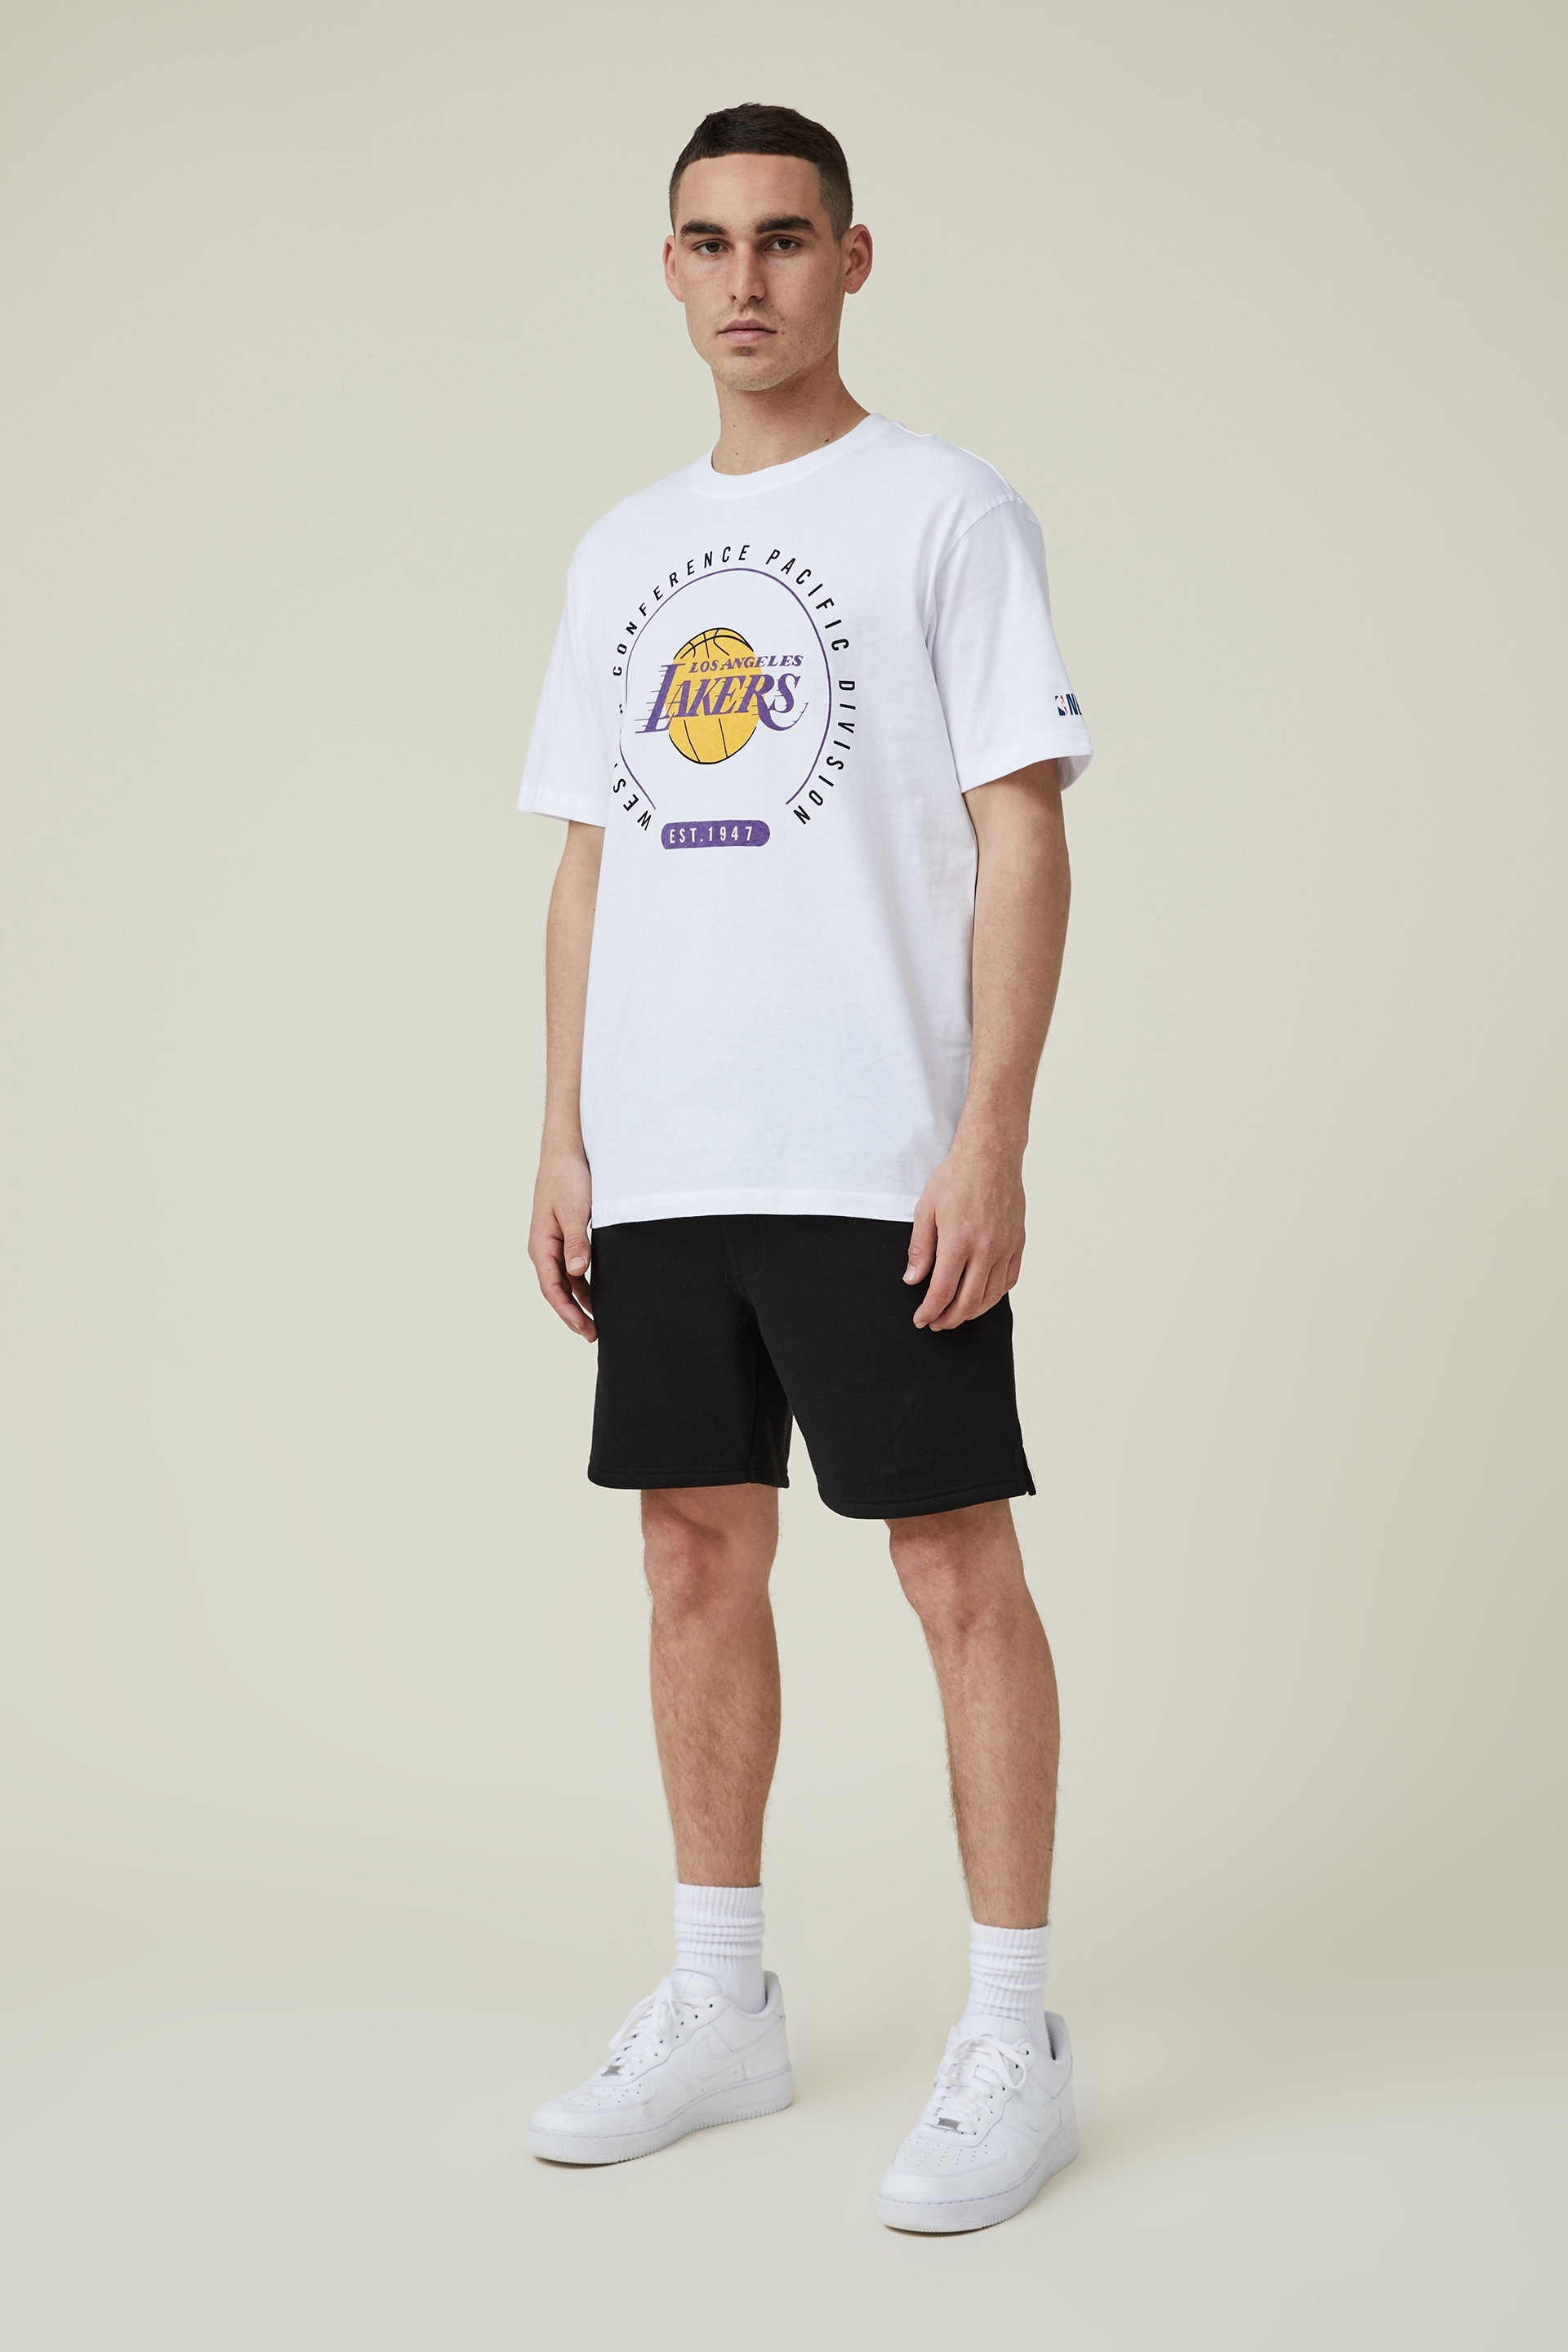 NBA, Logo T Shirt Mens, Short Sleeve Performance T-Shirts